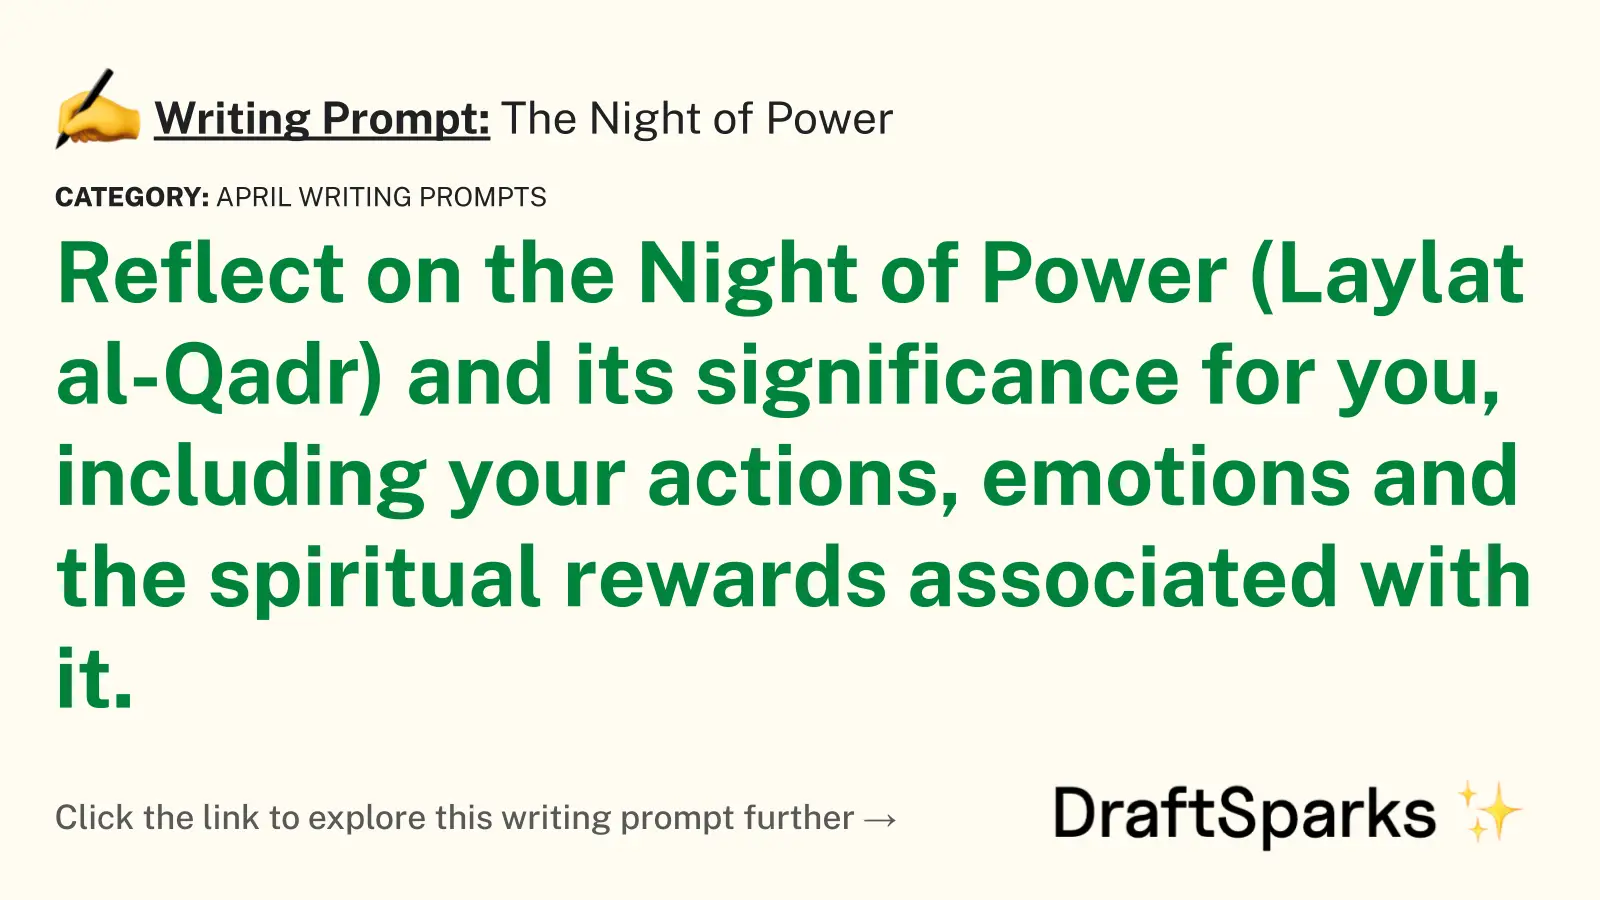 The Night of Power